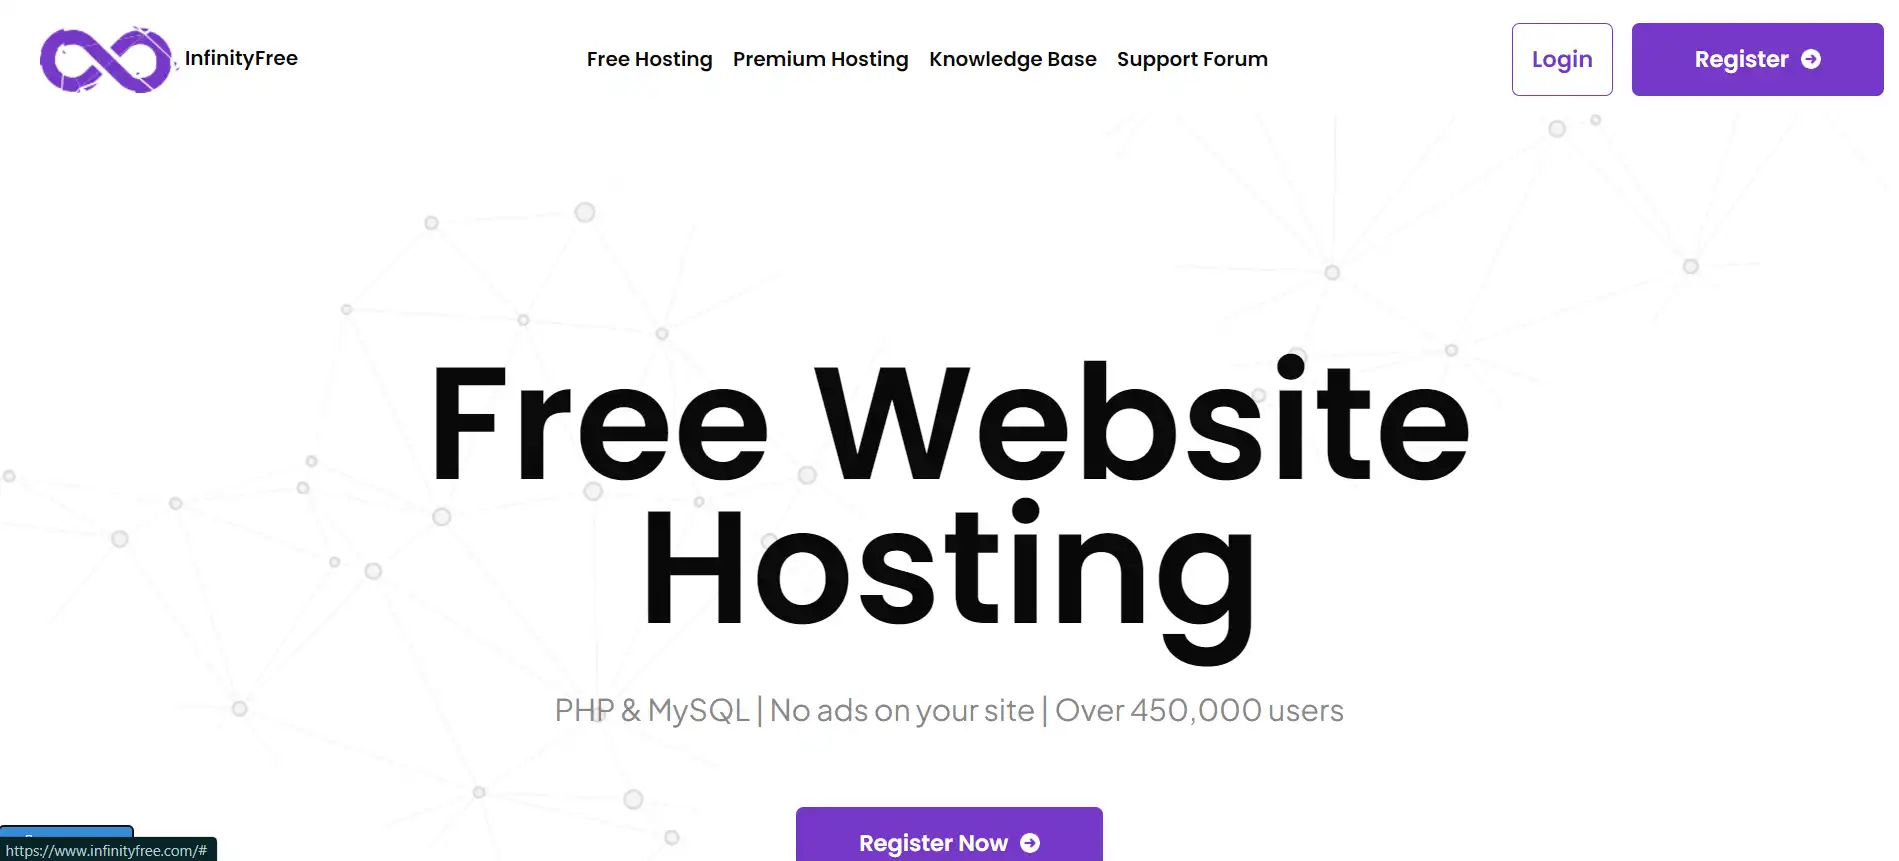 free website hosting infinityfree.com